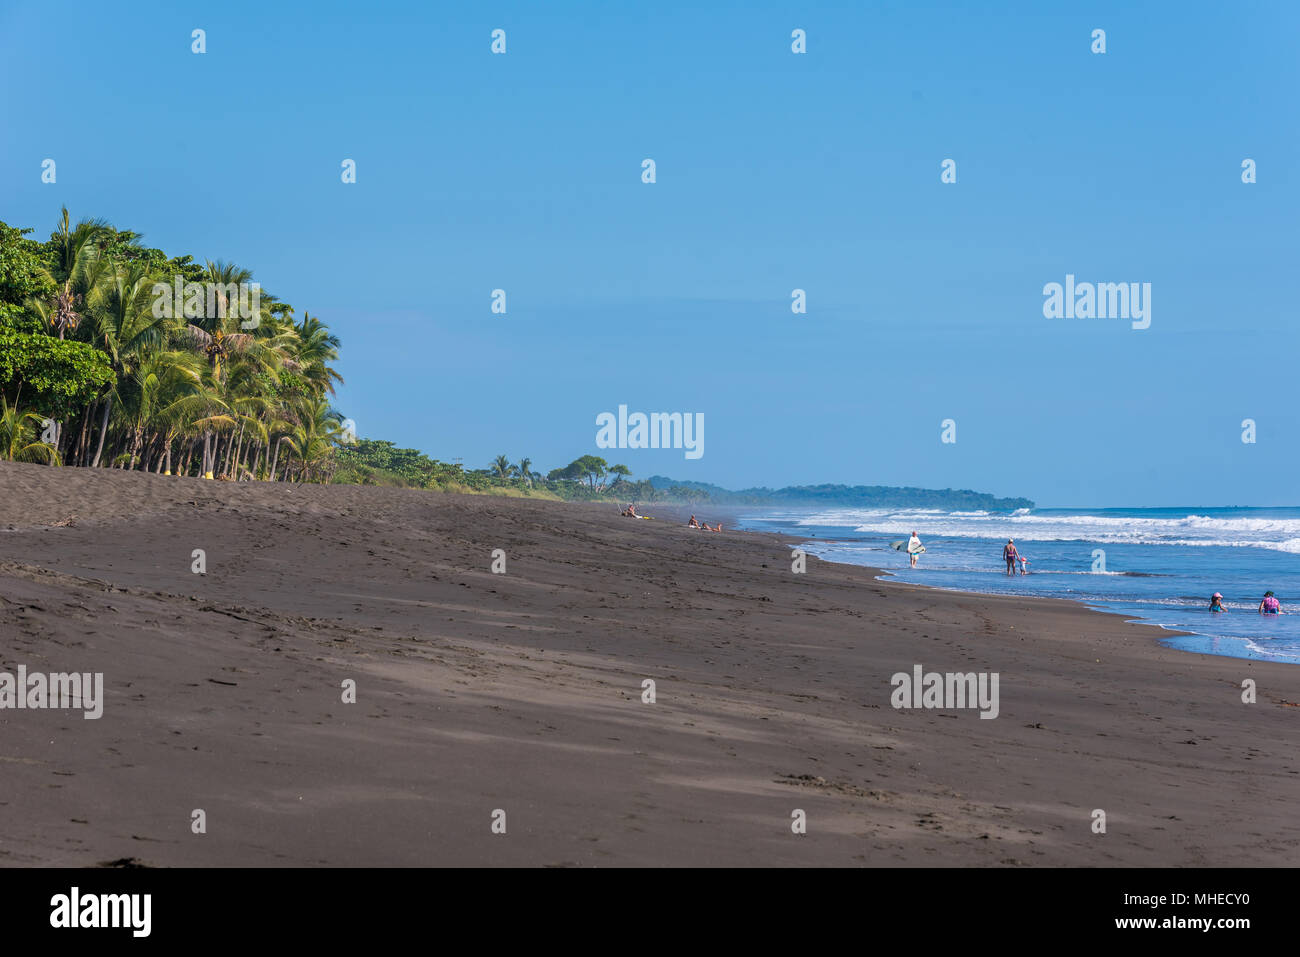 Playa hermosa en Costa Rica - pacific coast Stock Photo